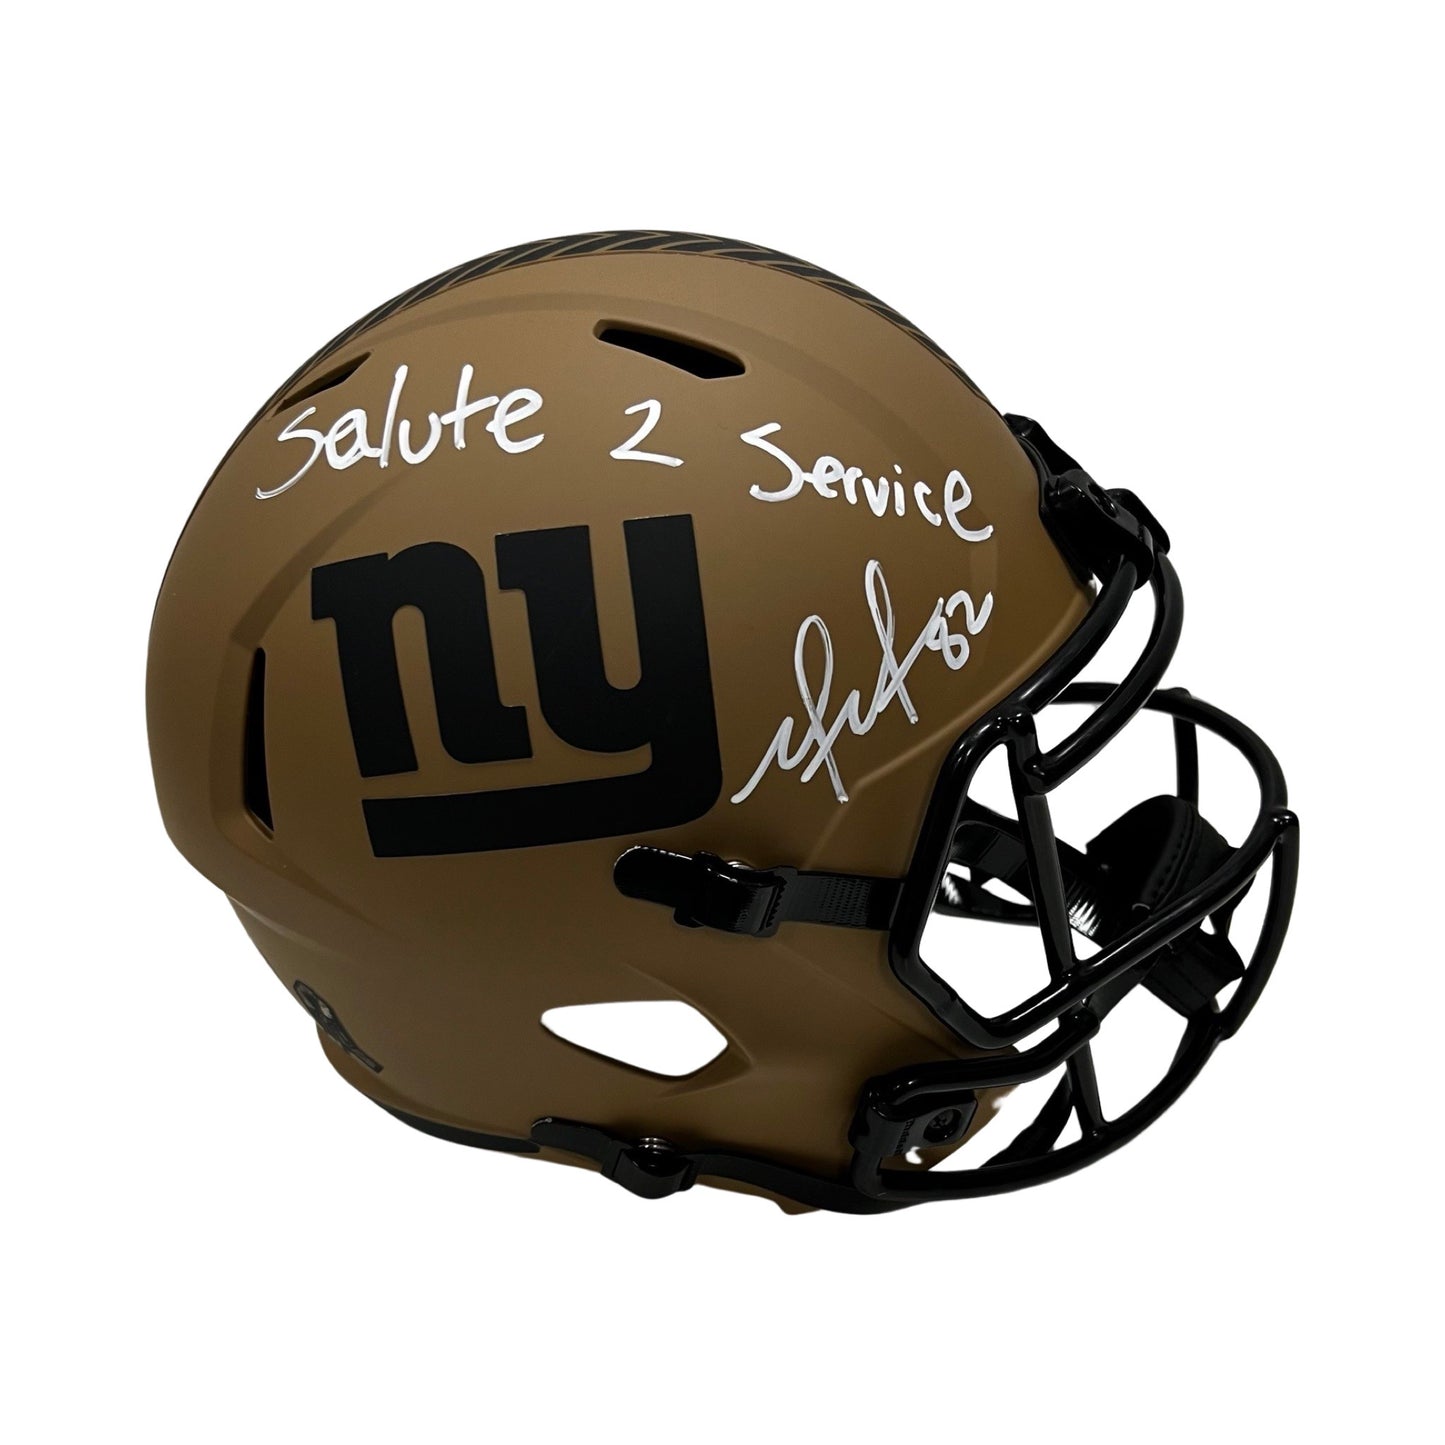 Mario Manningham Autographed New York Giants Salute to Service Replica Helmet "Service 2 Service" Inscription Steiner CX